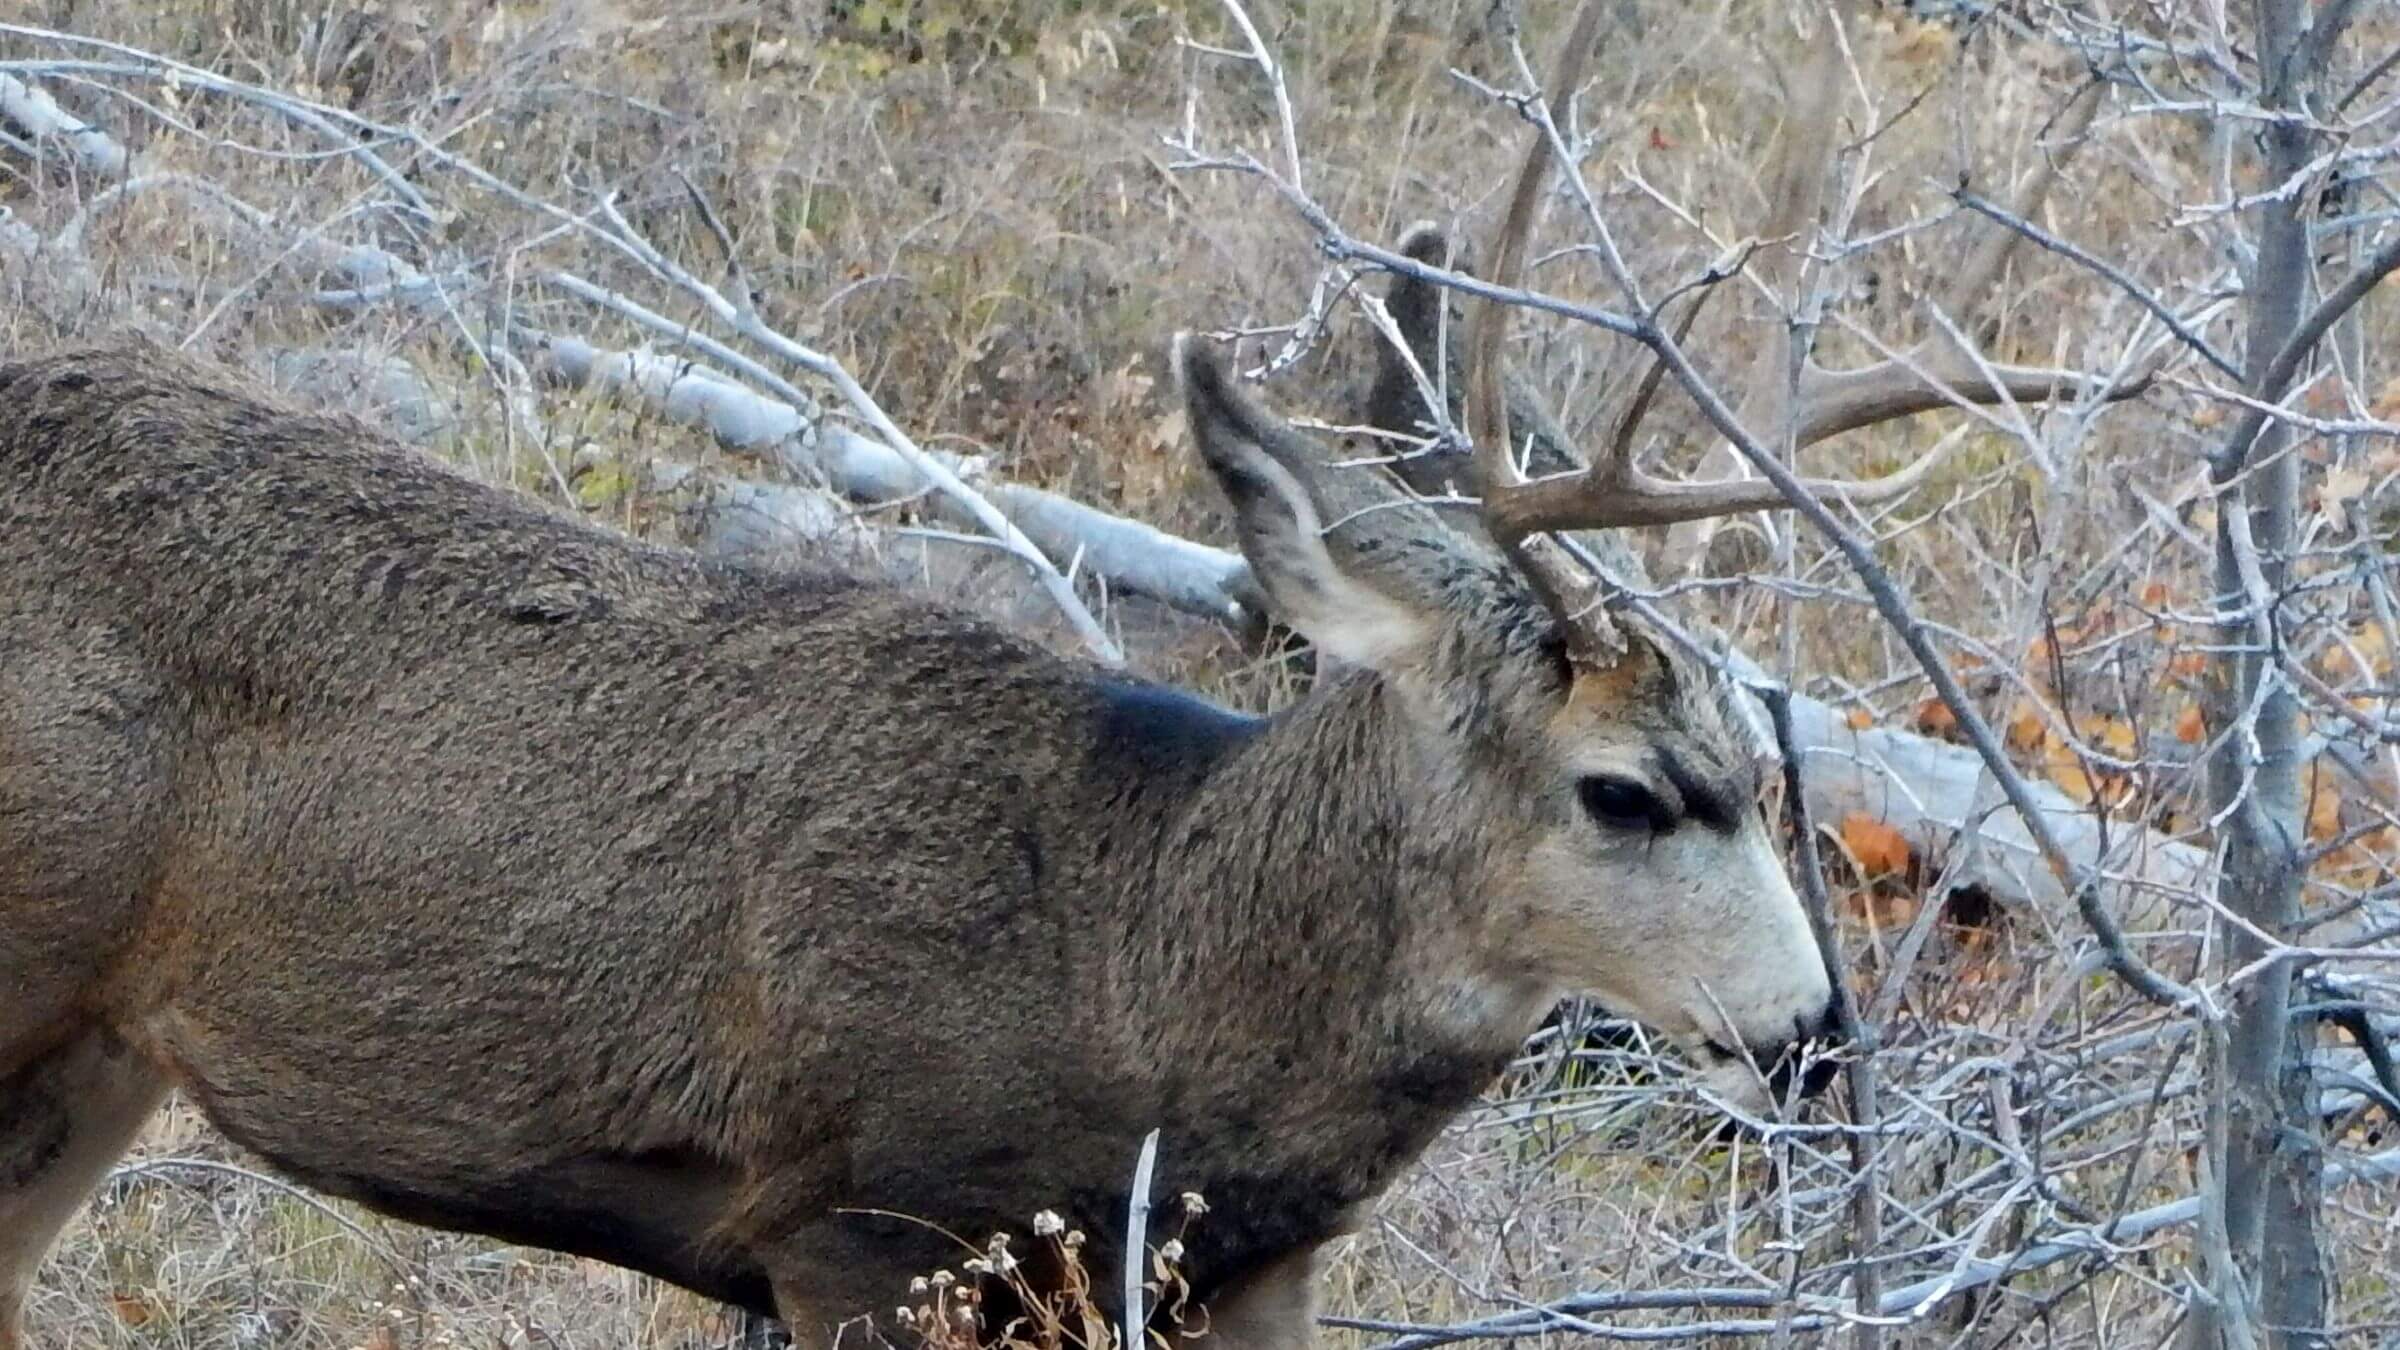 Zion Wilderness, Cabin Spring, Mule deer, November